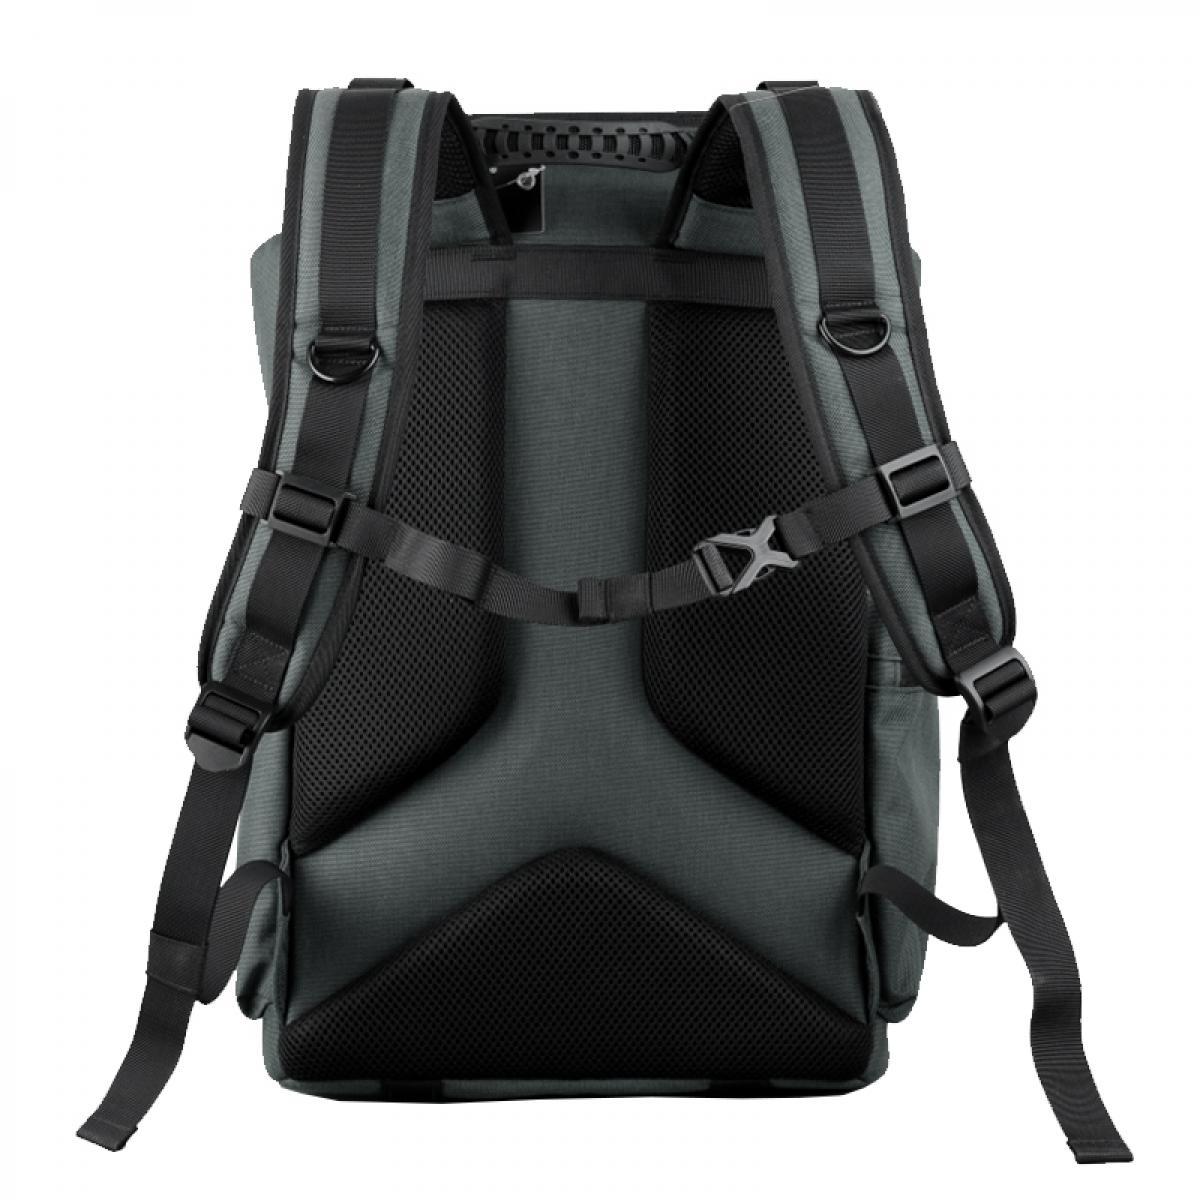 K&F Concept KF13-098V1 Multifunctional DSLR Camera Travel Backpack for Outdoor Photography Waterproof